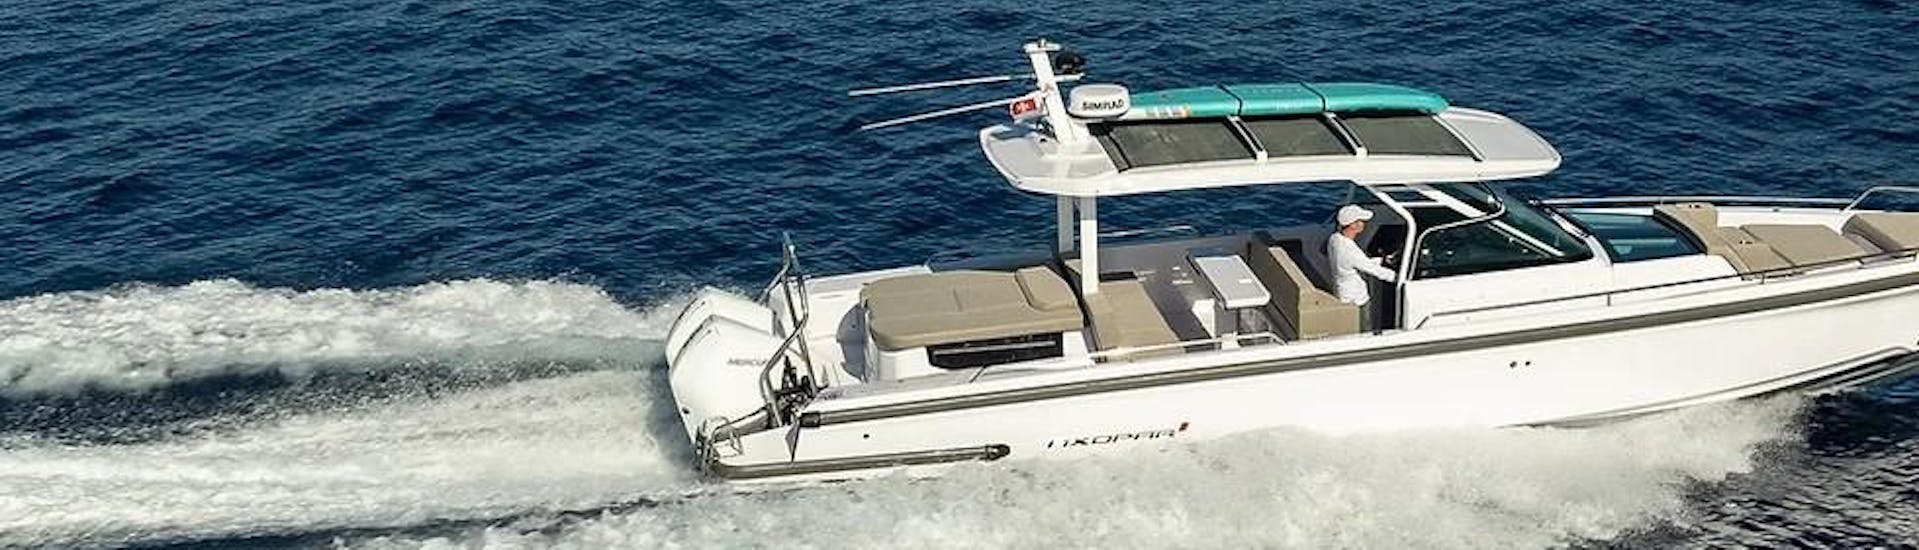 The Axopar 37 Meditterana speedboat of Nautiful Malta on the water. 